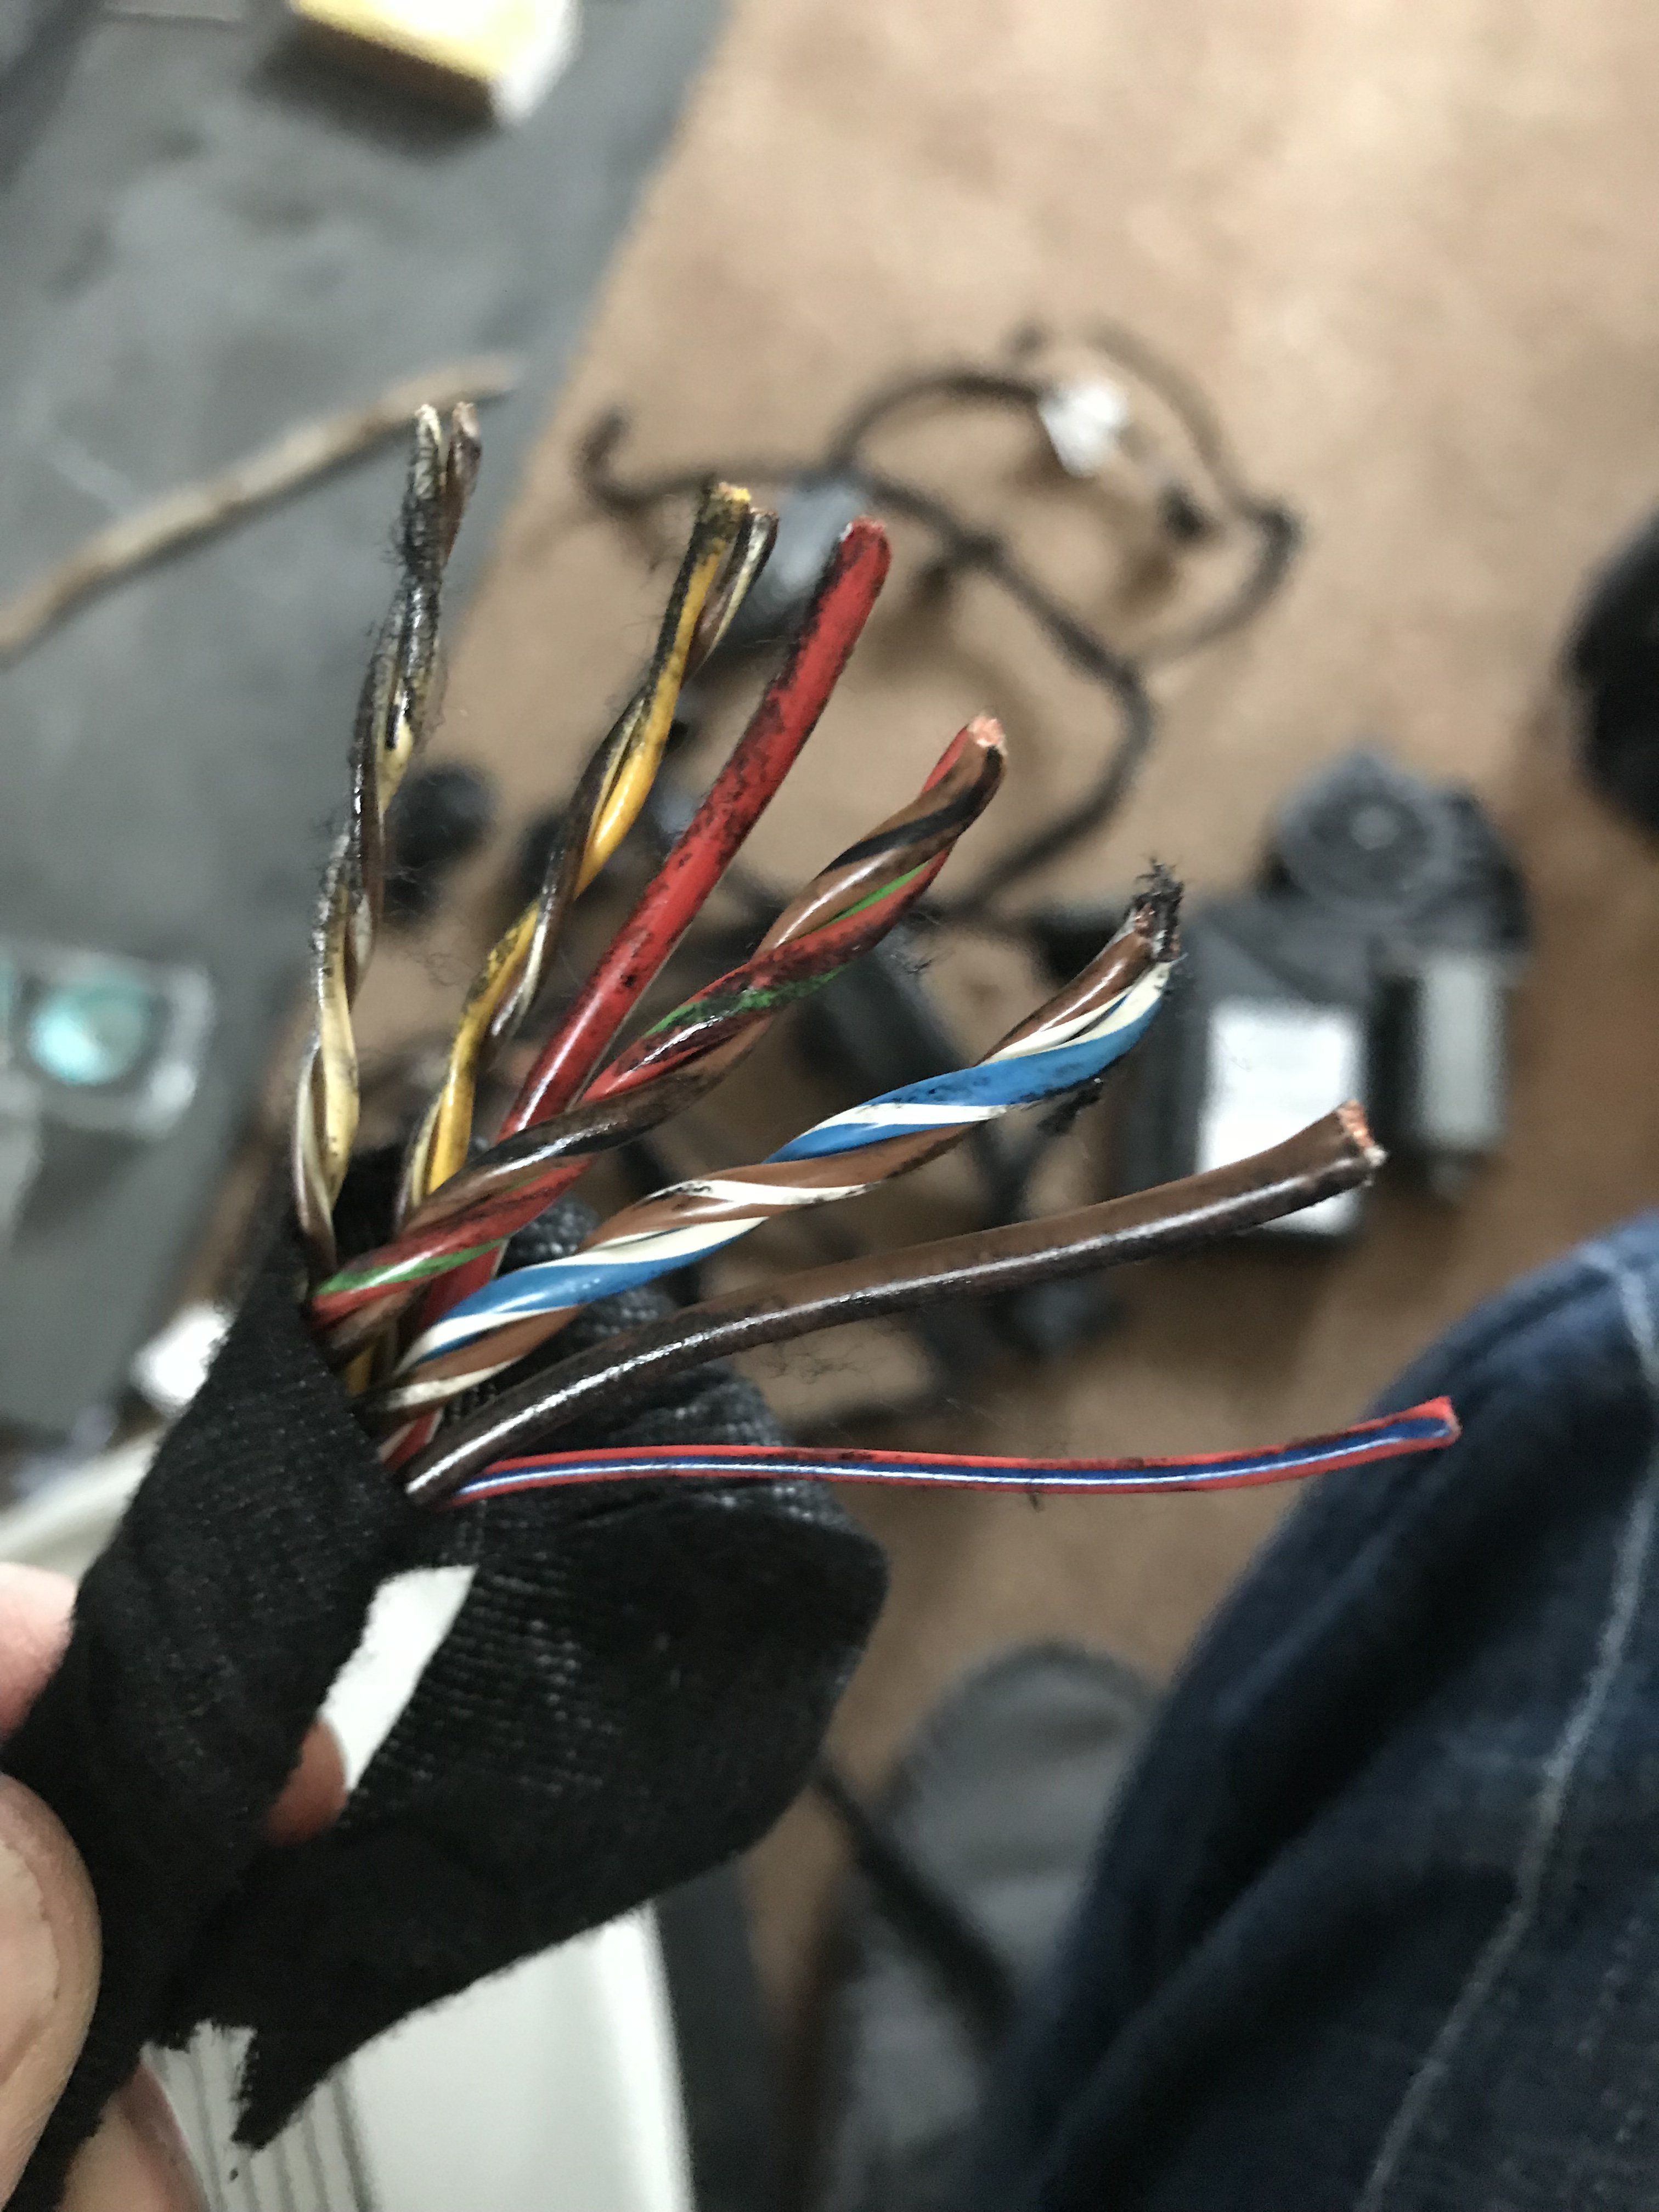 Stock Blaupunkt Amp Wiring Help Needed